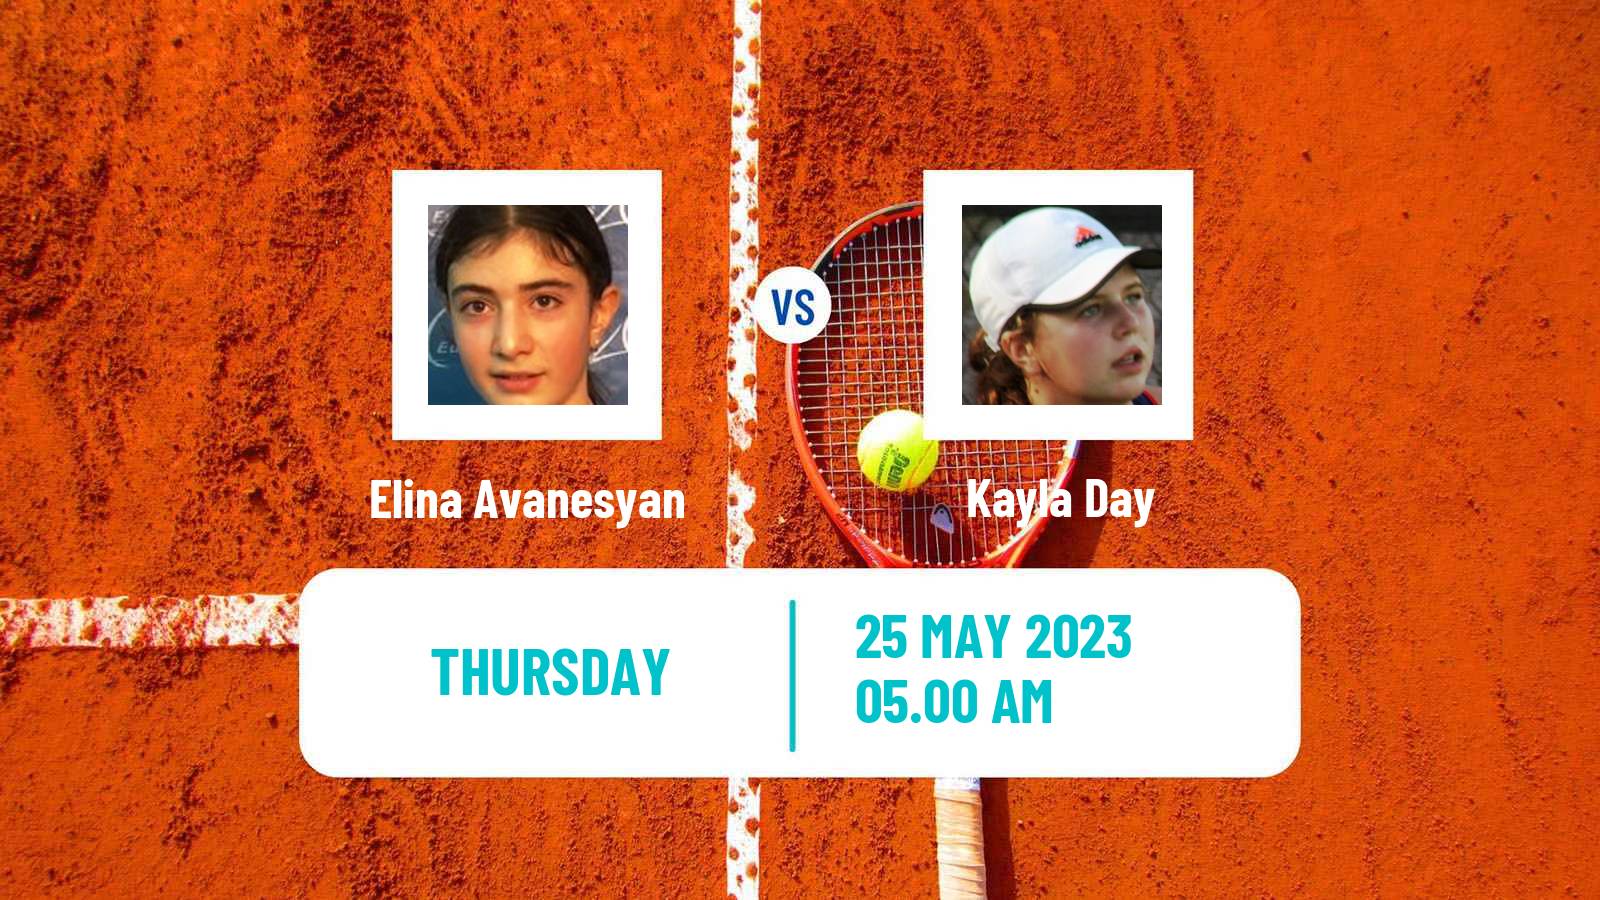 Tennis WTA Roland Garros Elina Avanesyan - Kayla Day